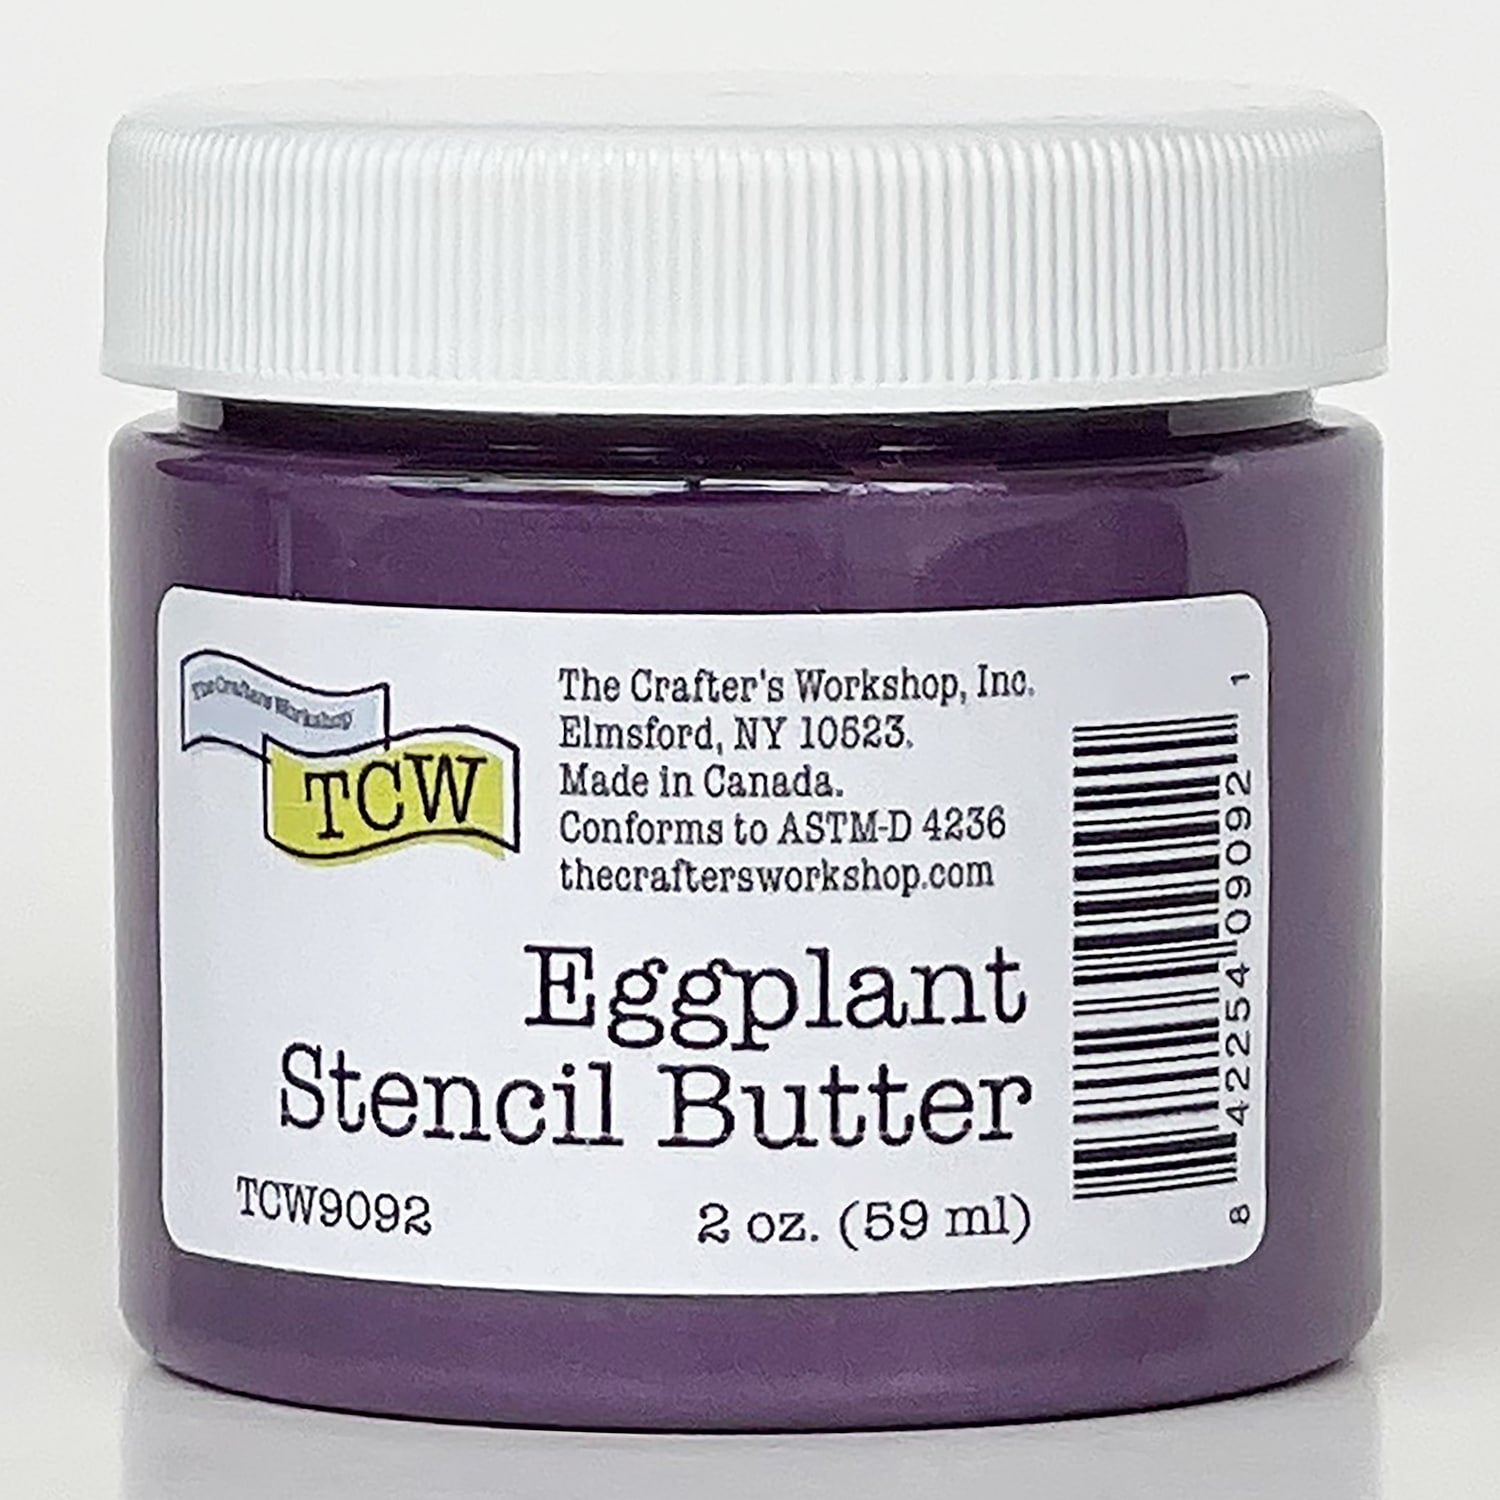 TCW Stencil Butter - Eggplant